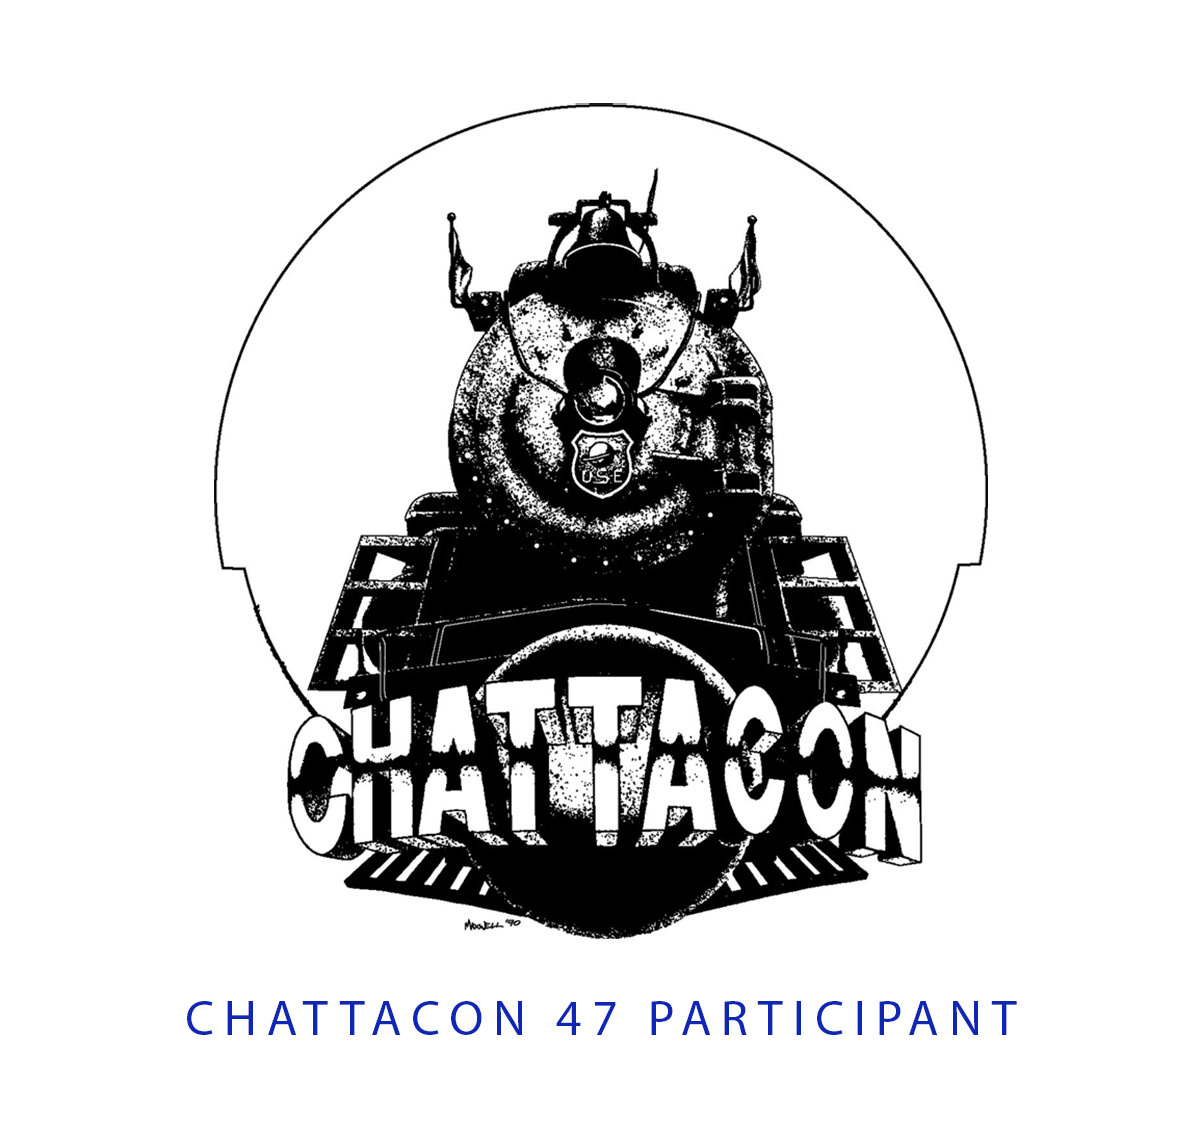 Chattacon 47 Participant